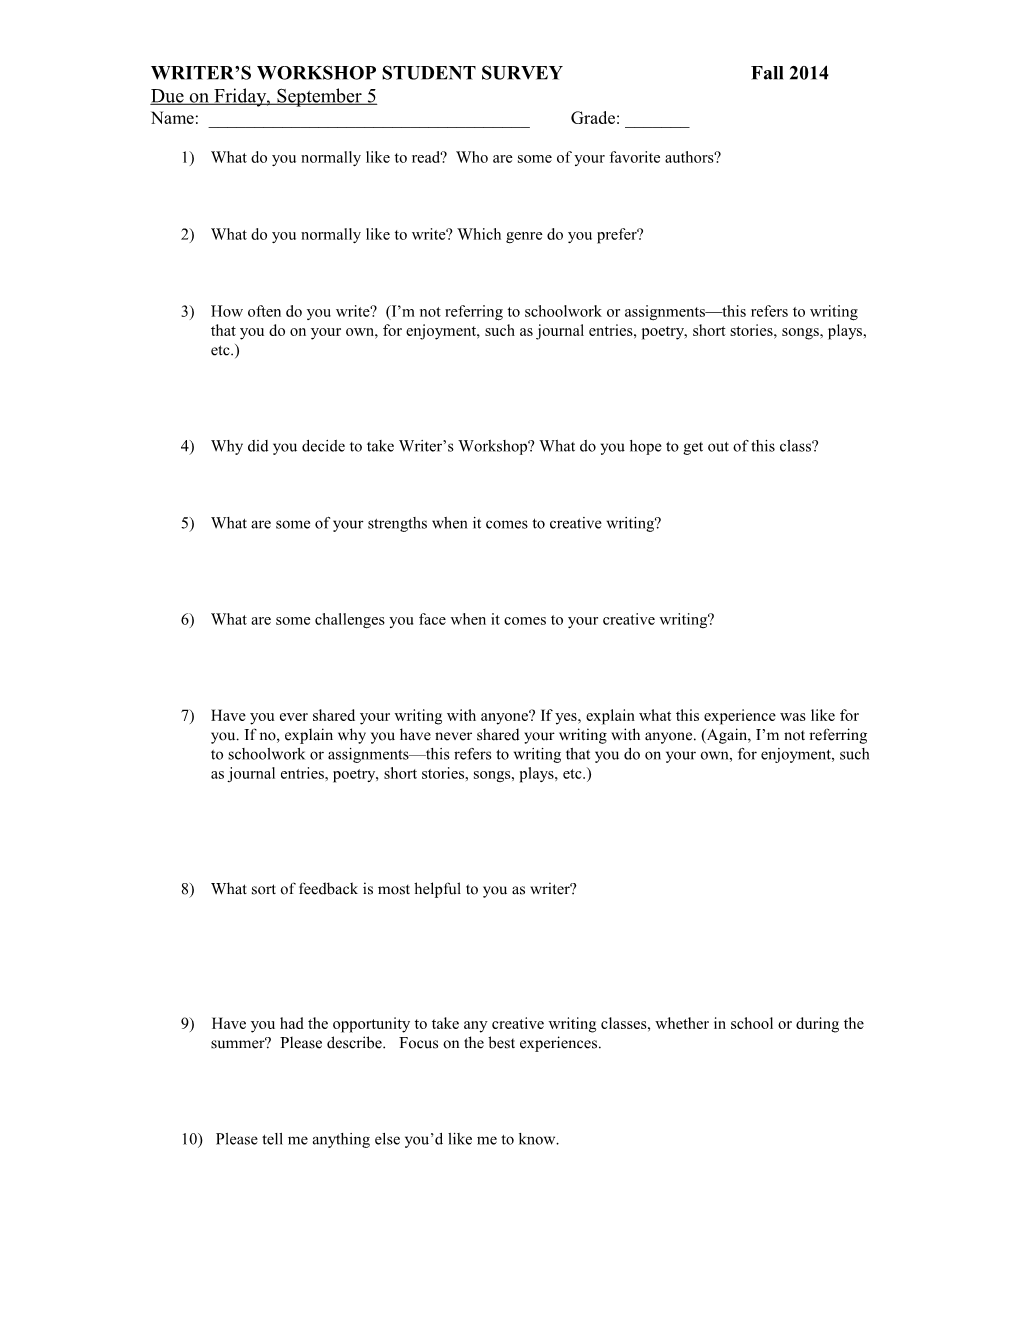 Creative Writing Student Survey